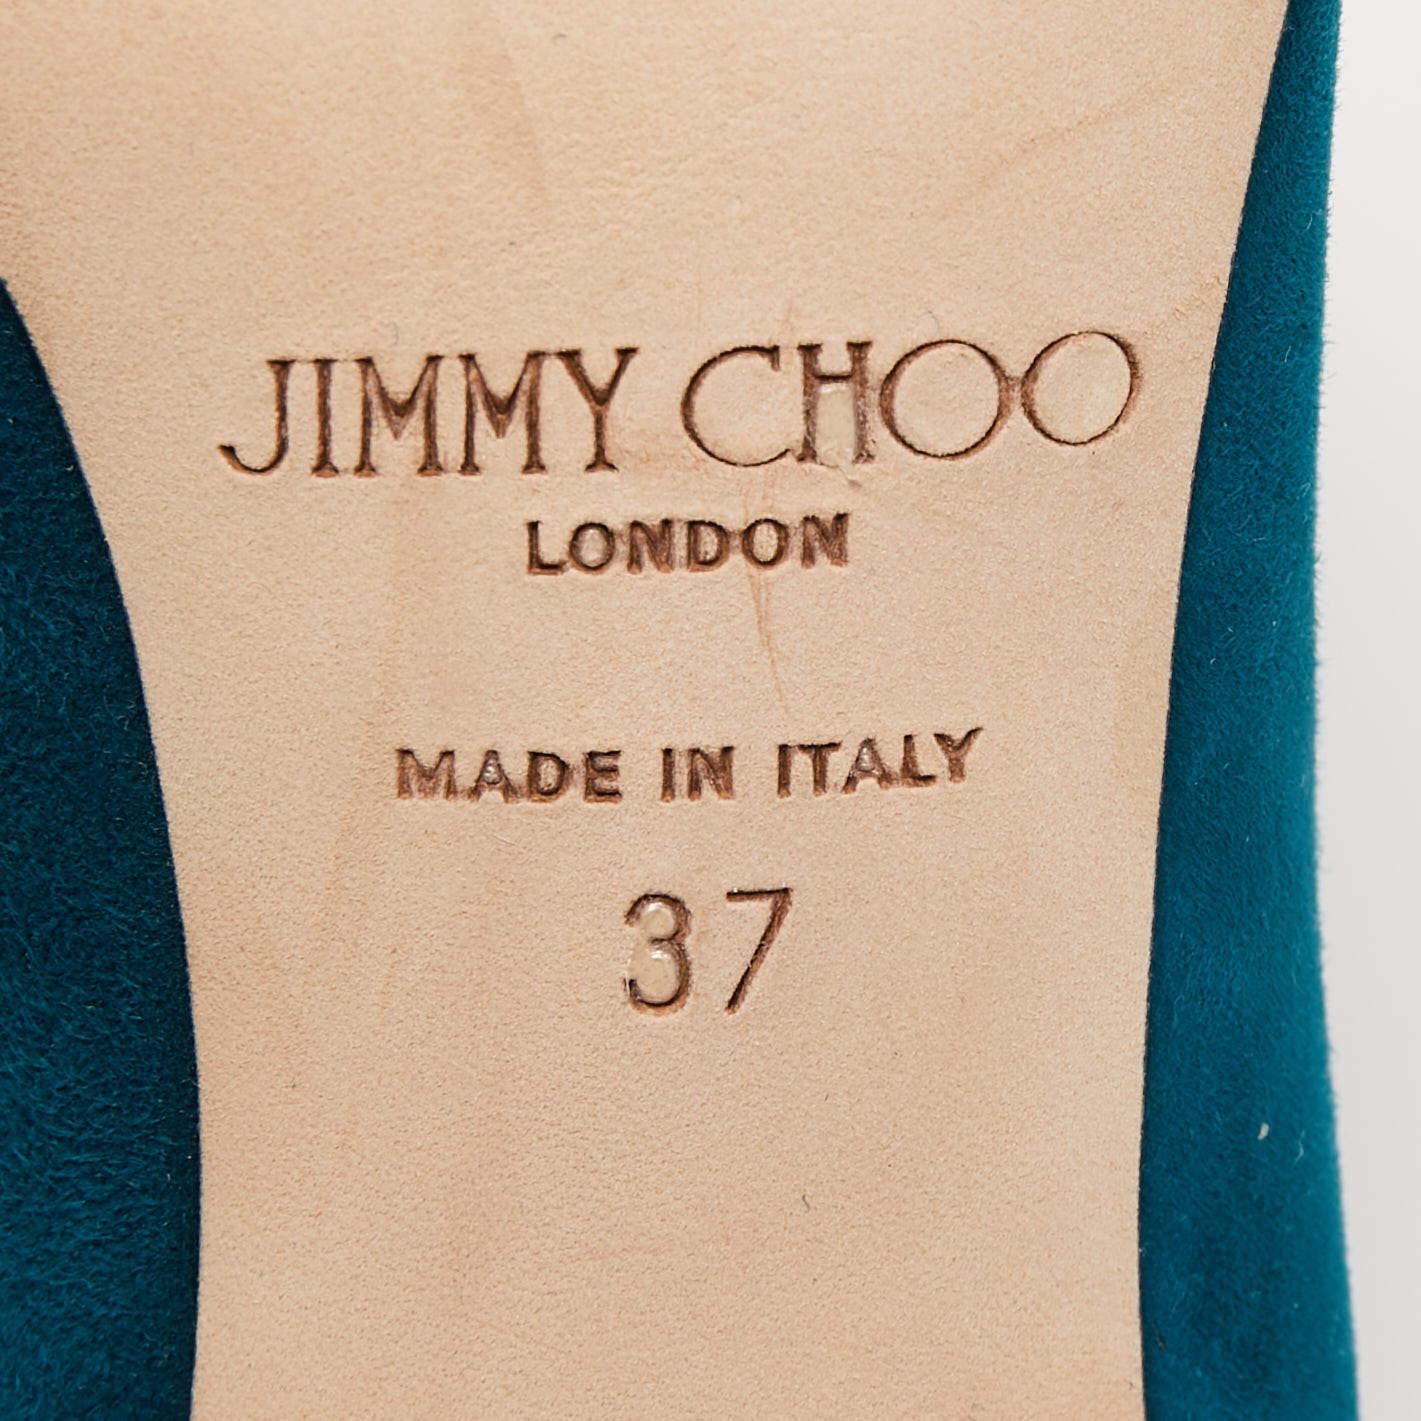 Jimmy Choo Teal Suede Vesna Pumps Size 37 For Sale 1